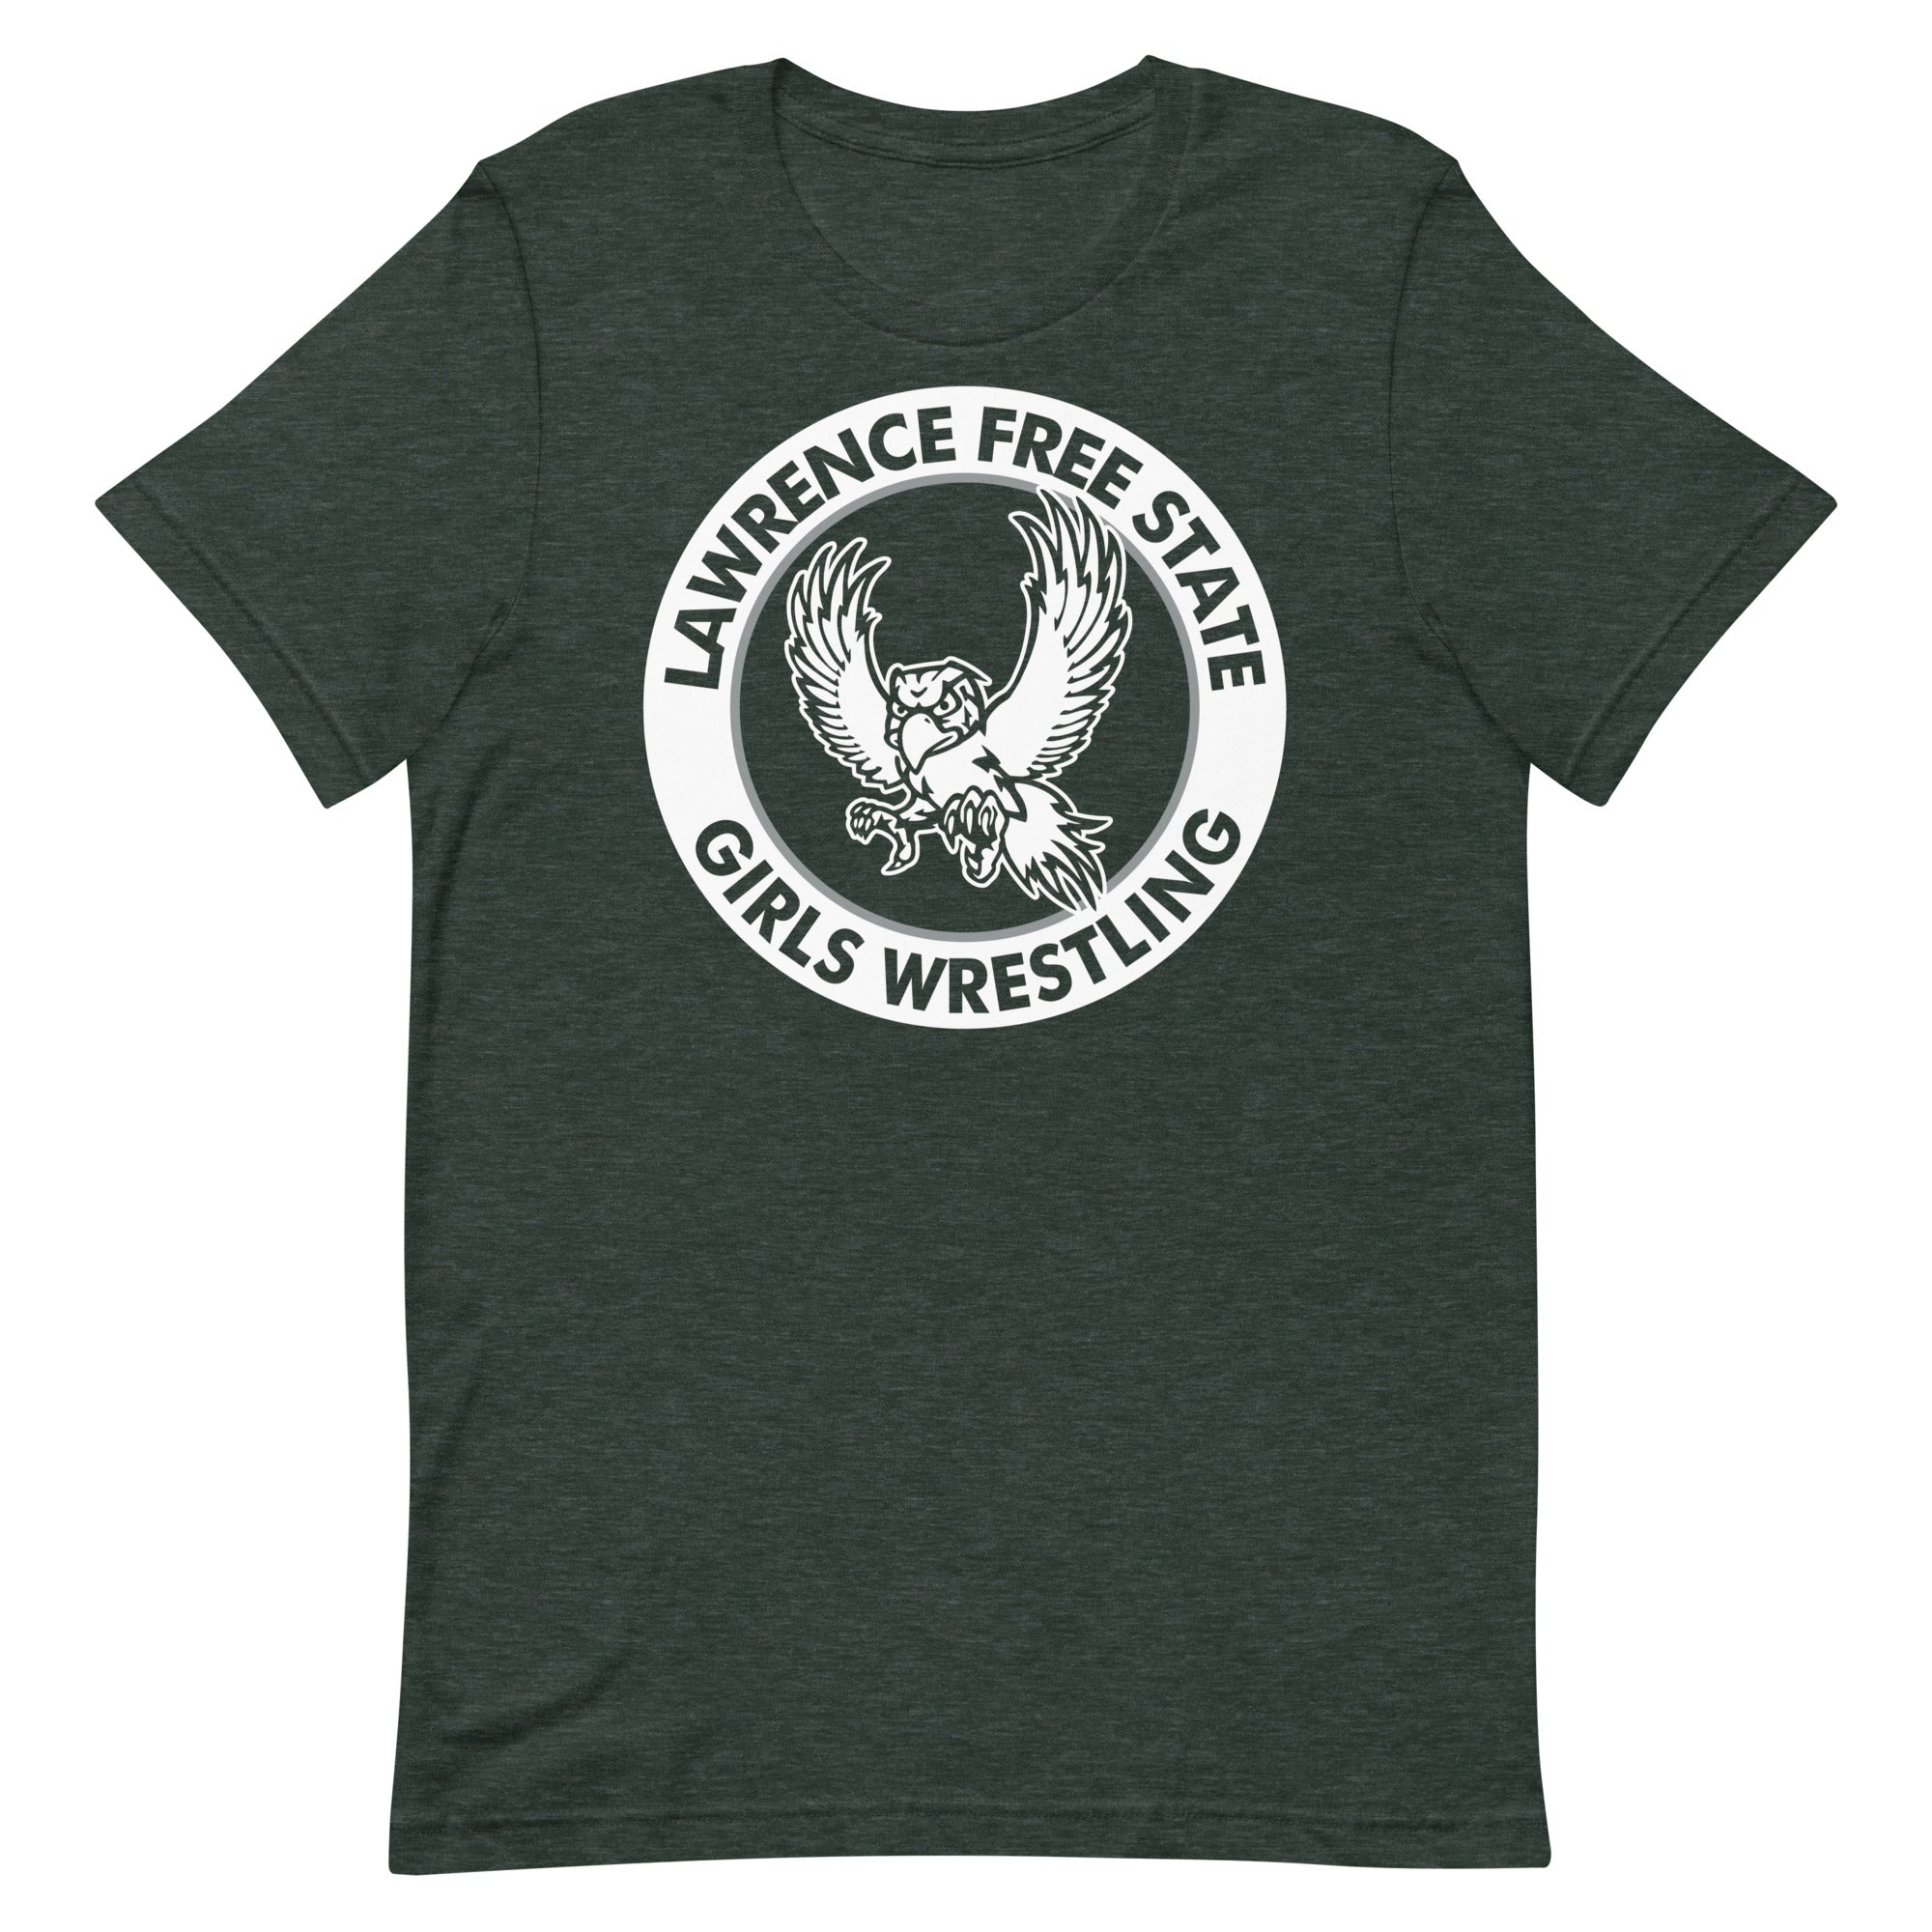 Lawrence Free State Girls Wrestling  Unisex Staple T-Shirt